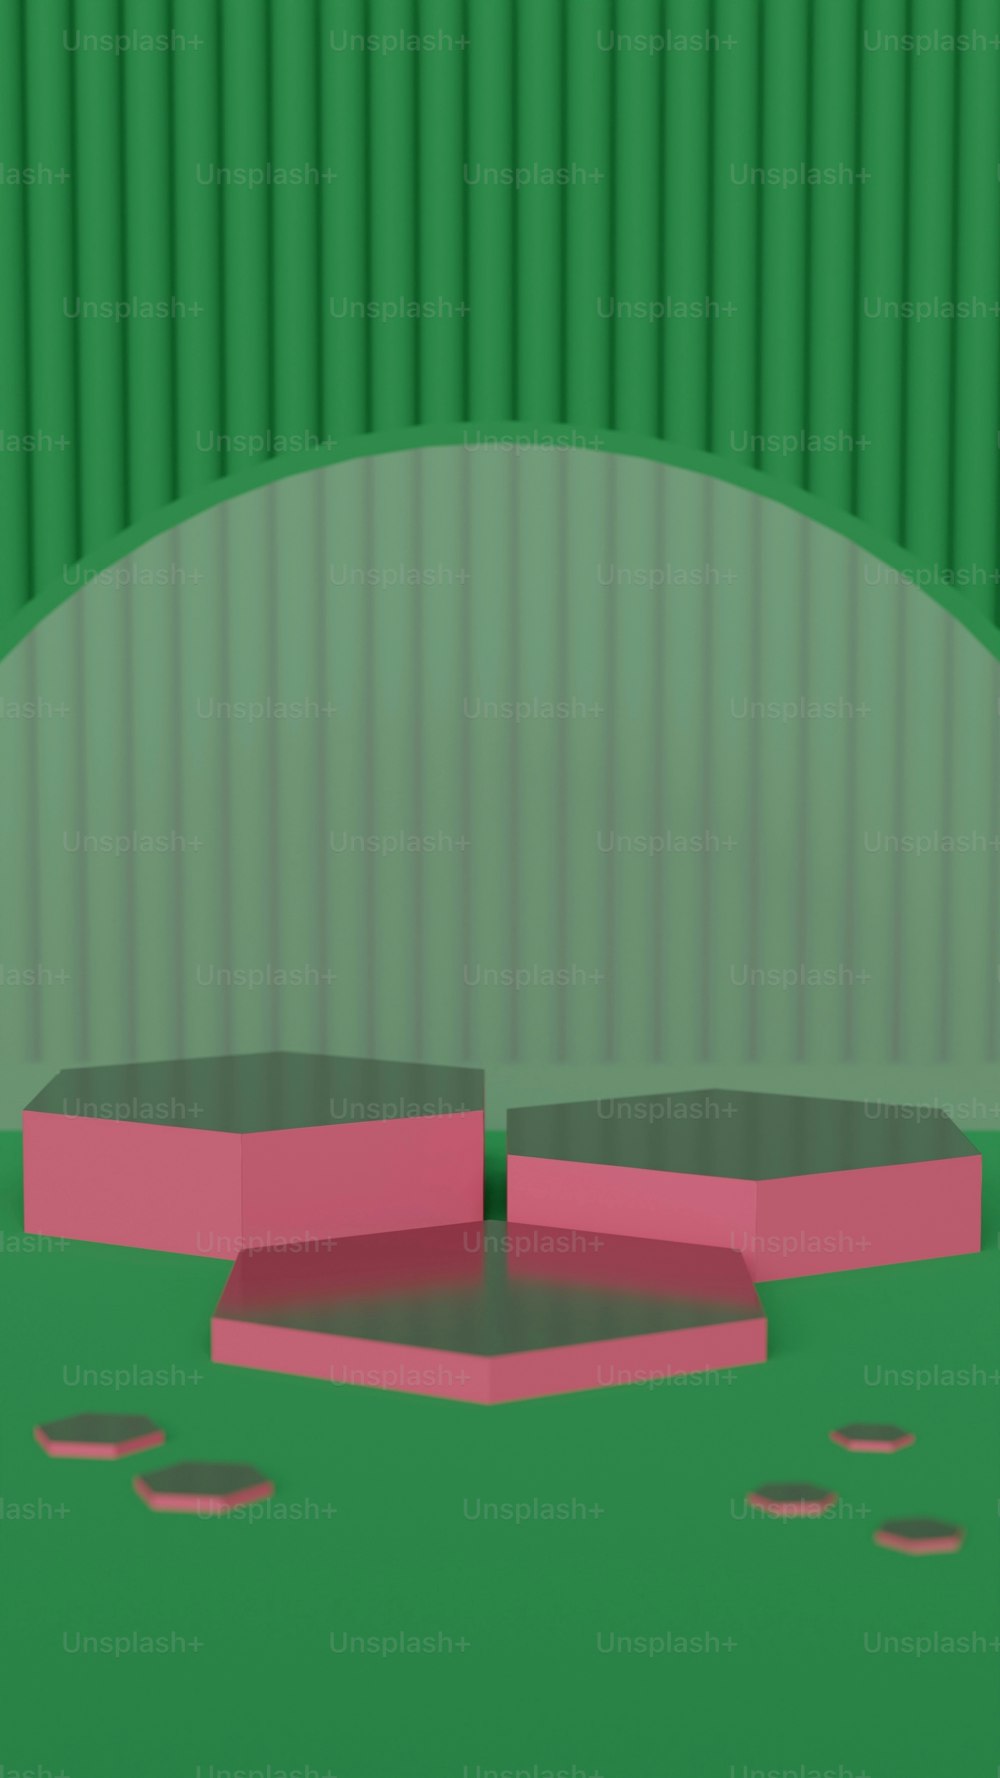 Una imagen generada por computadora de un objeto rosa